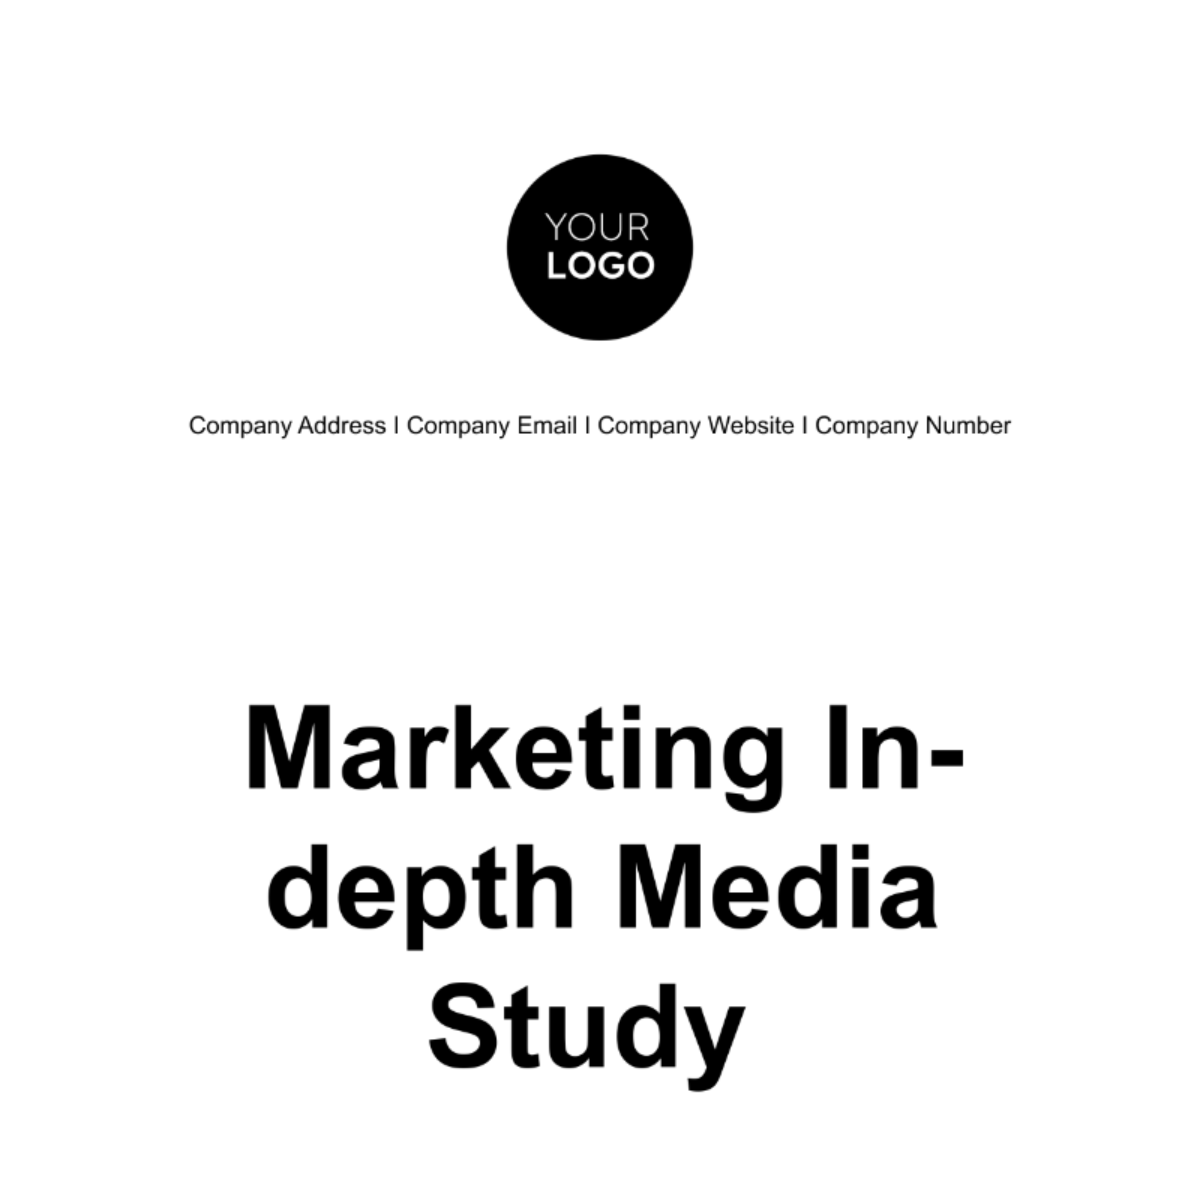 Marketing In-depth Media Study Template